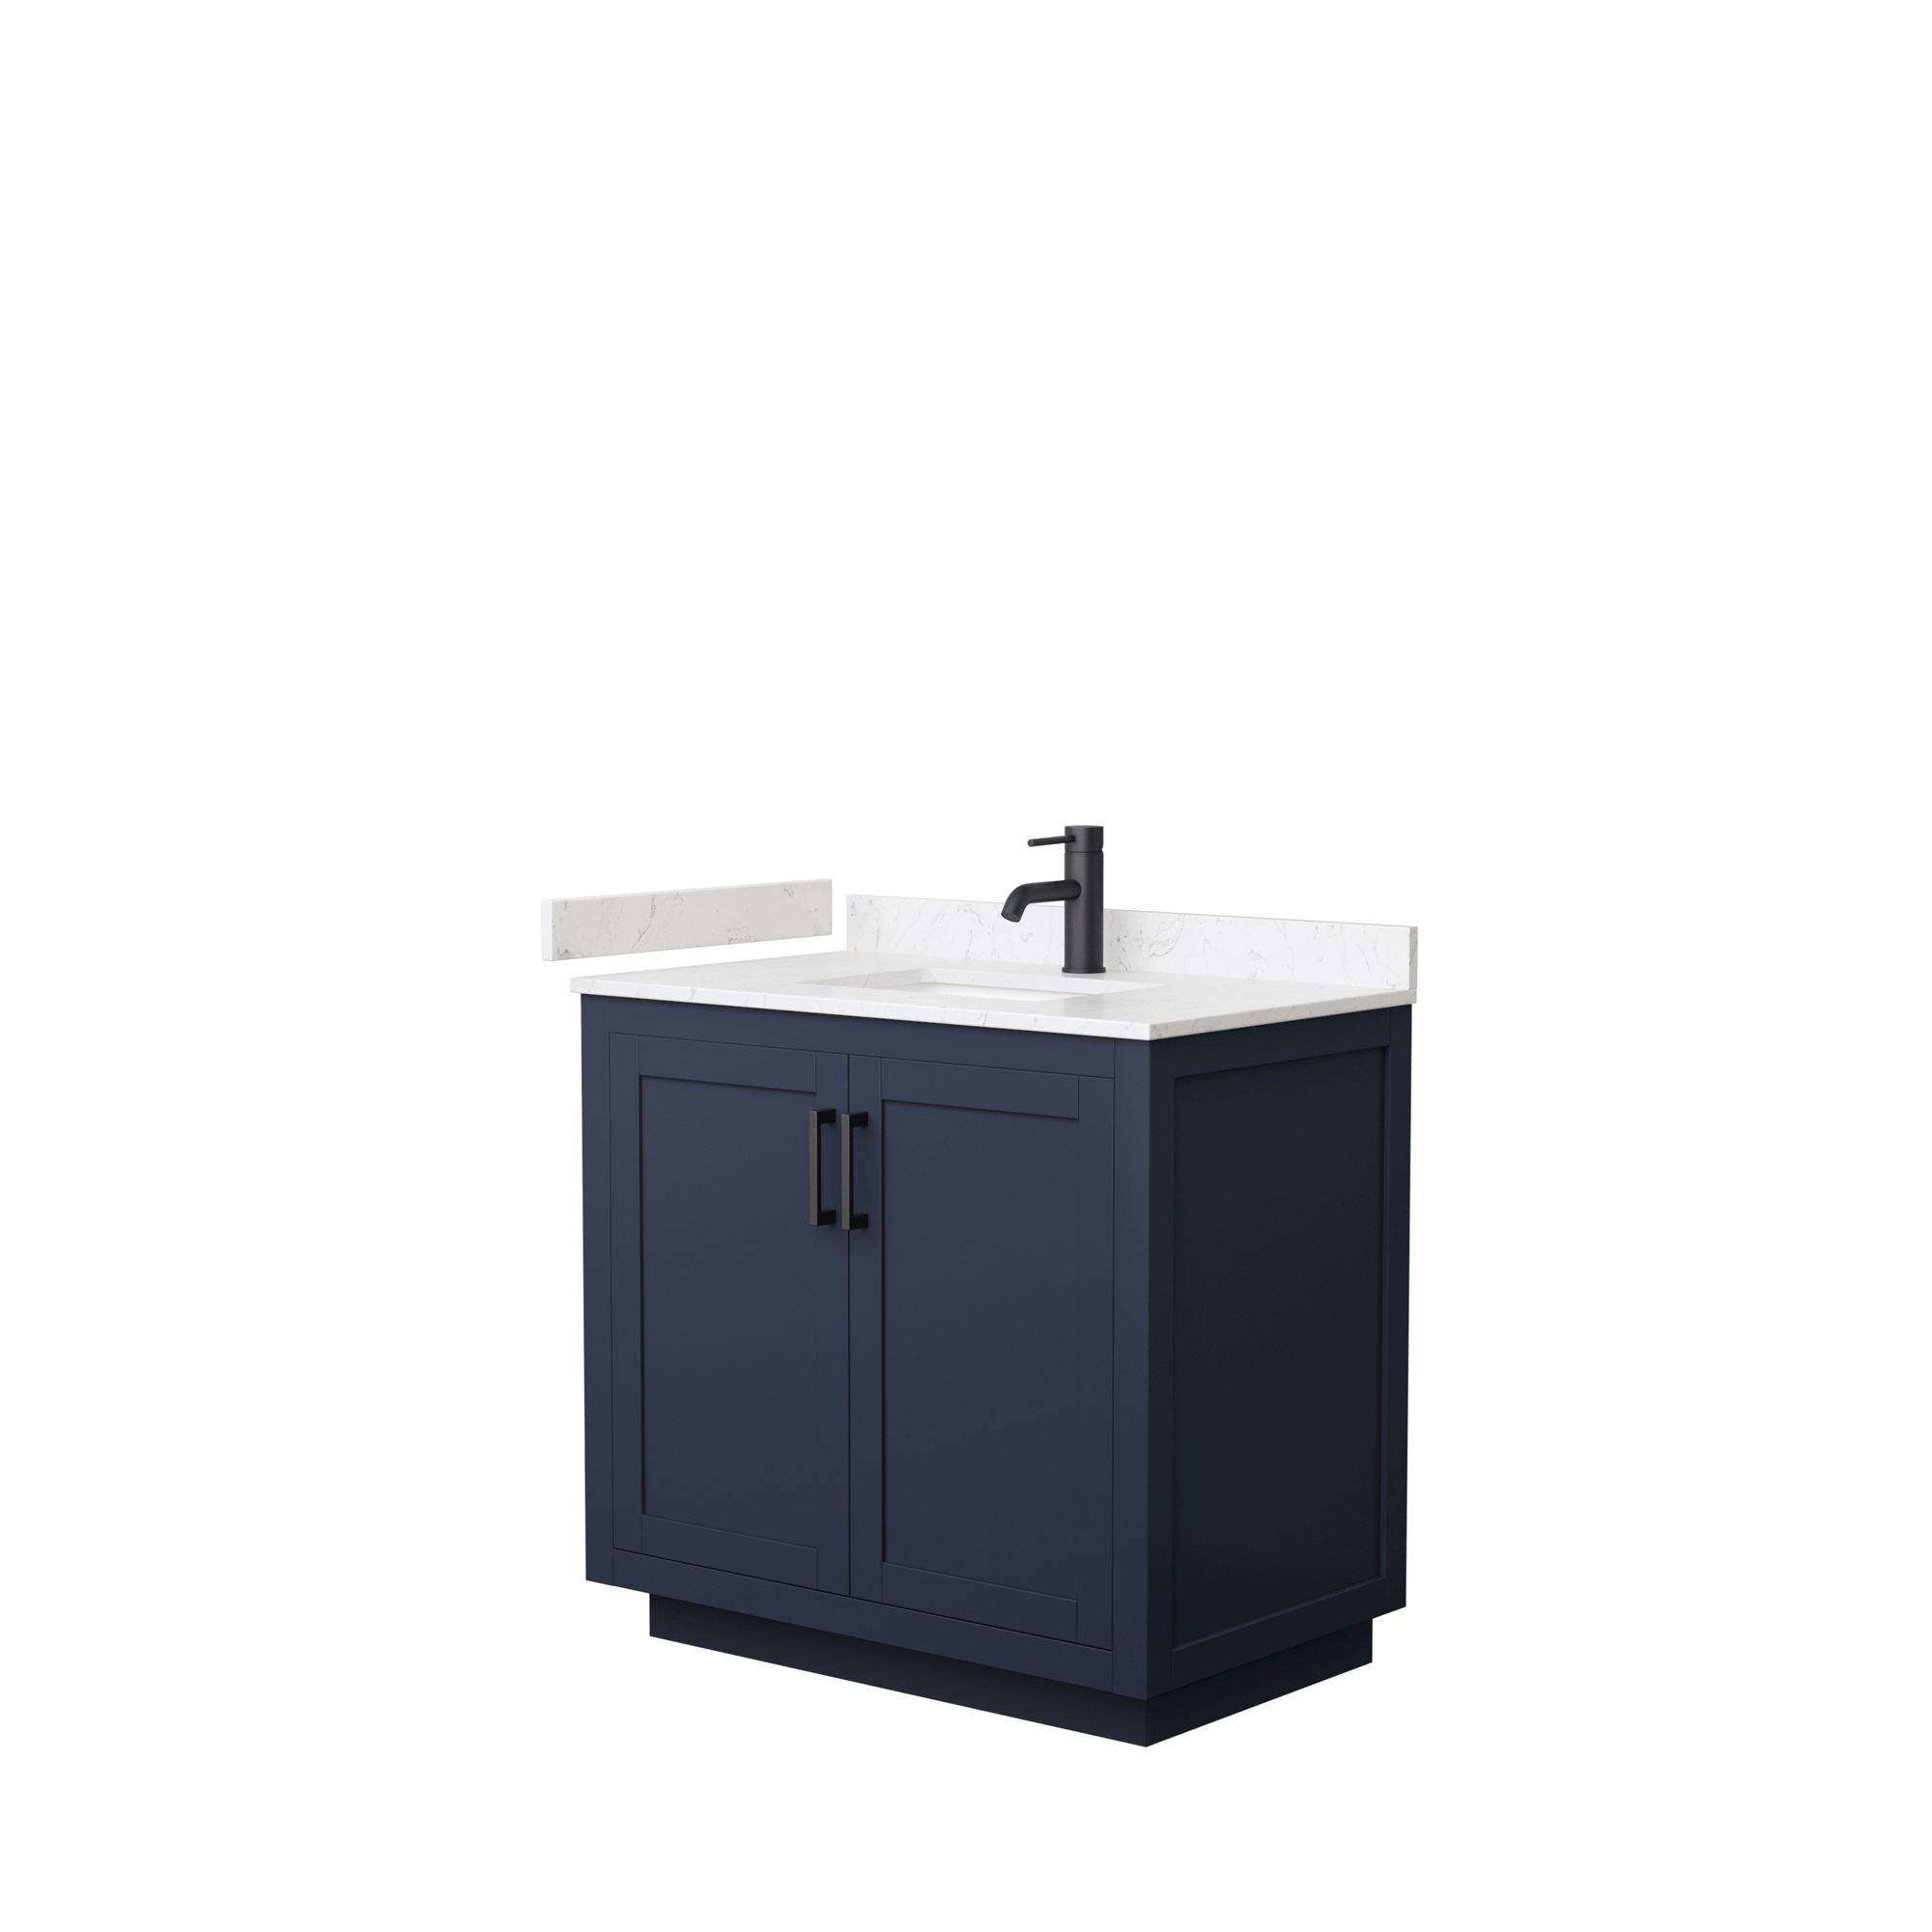 36" Single Bathroom Vanity in Dark Blue, Light-Vein Carrara Cultured Marble Countertop, Undermount Square Sink, Matte Black Trim